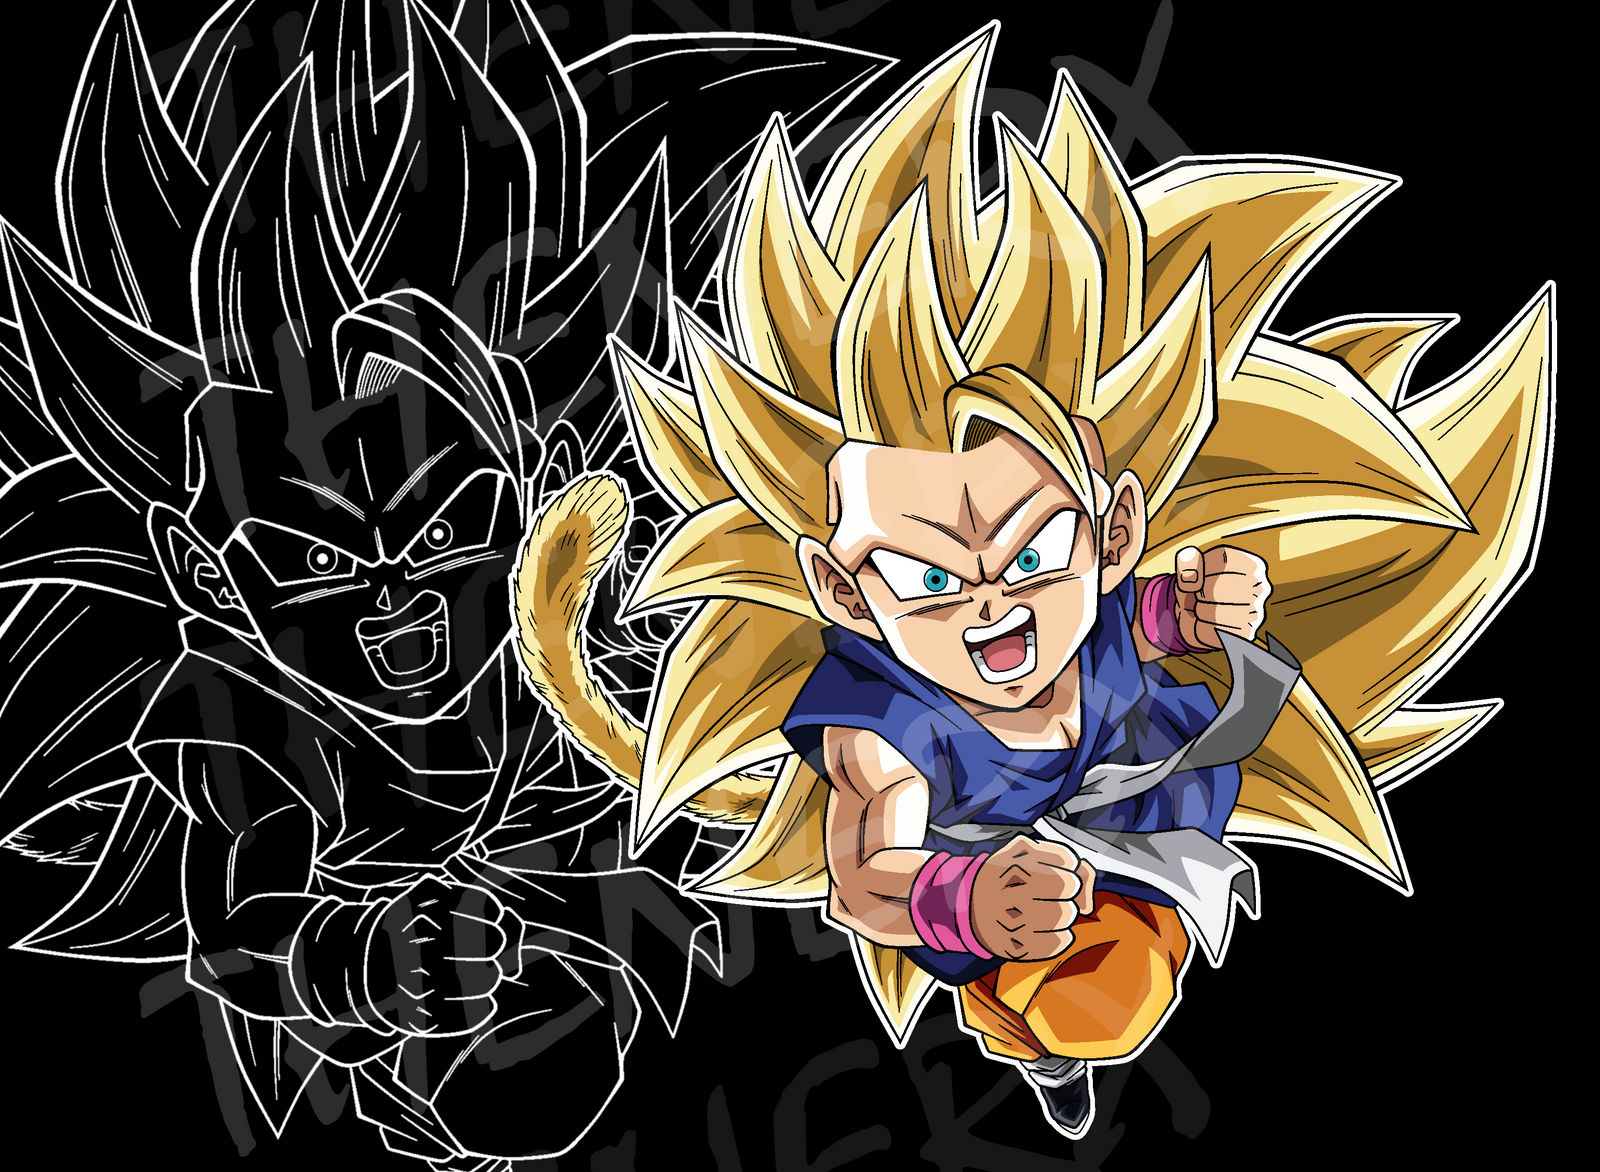 Super Saiyan 3 Goku Transformed by DragonBallAffinity on DeviantArt